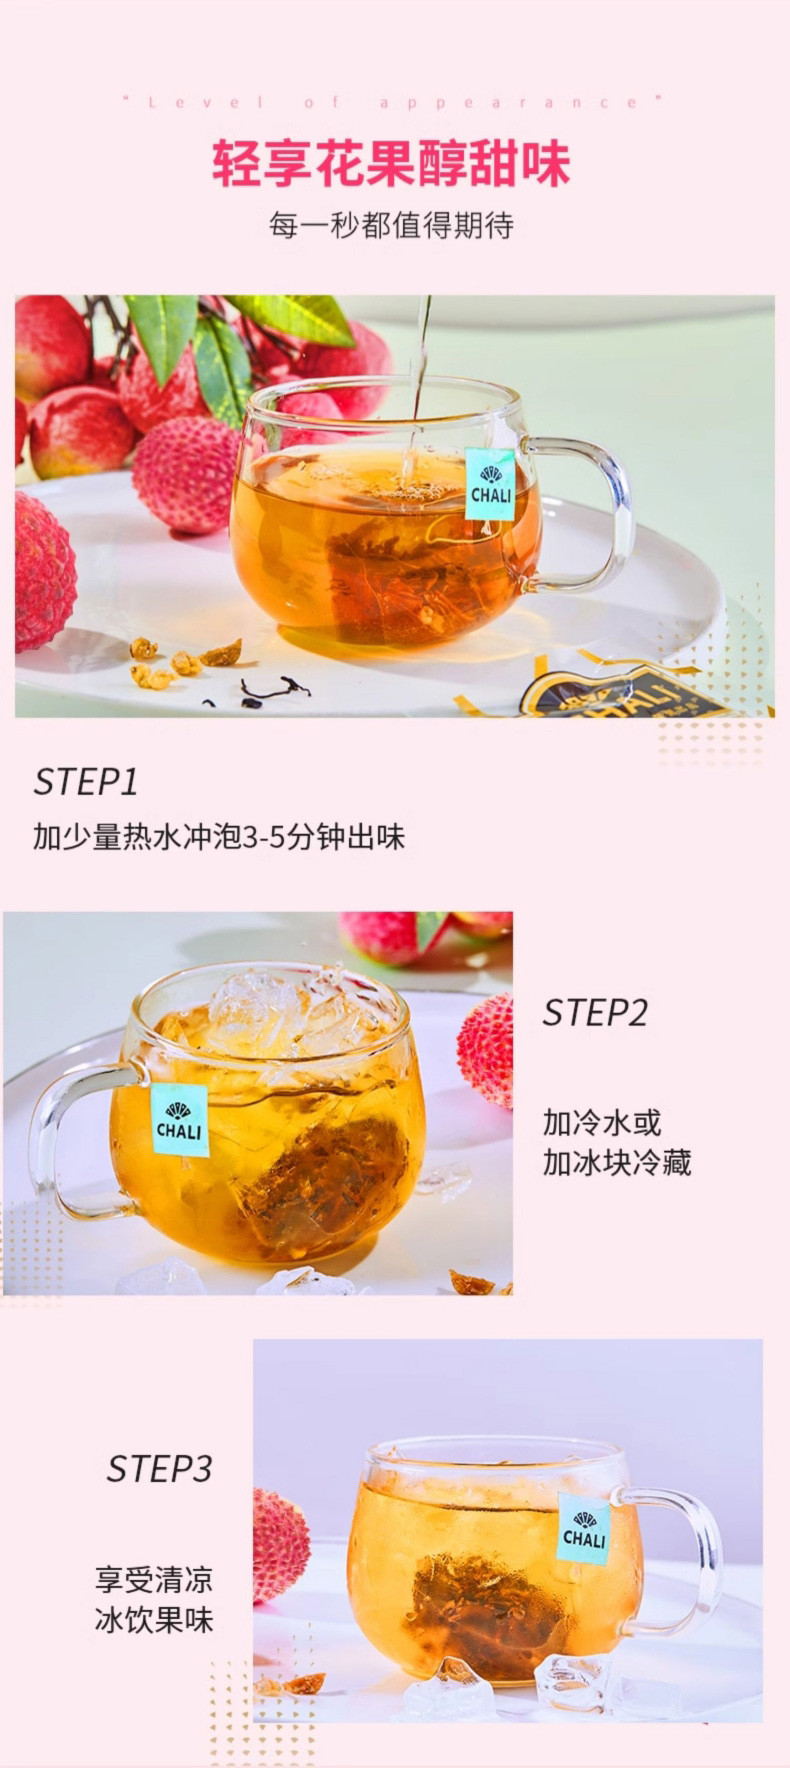 CHALI 茶里荔枝红茶盒装水果茶37.5g